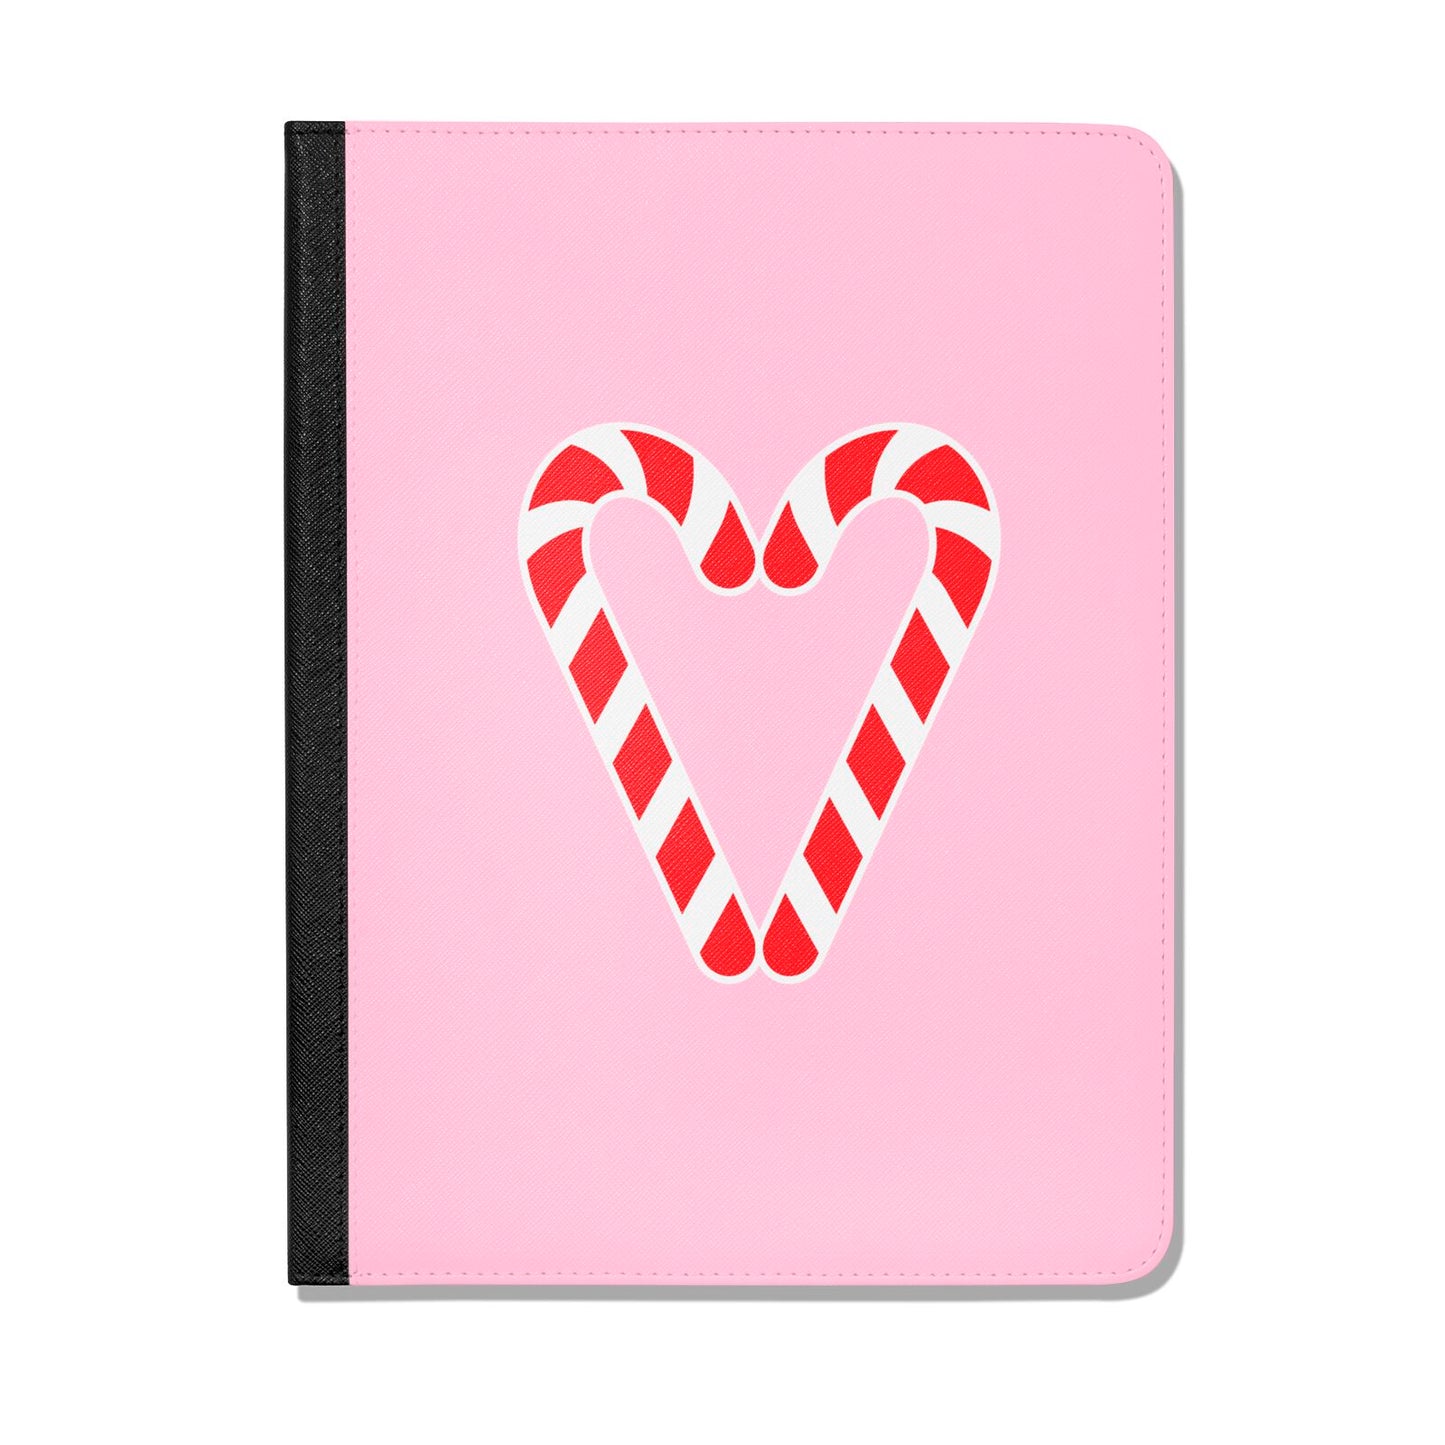 Candy Cane Heart Apple iPad Leather Folio Case